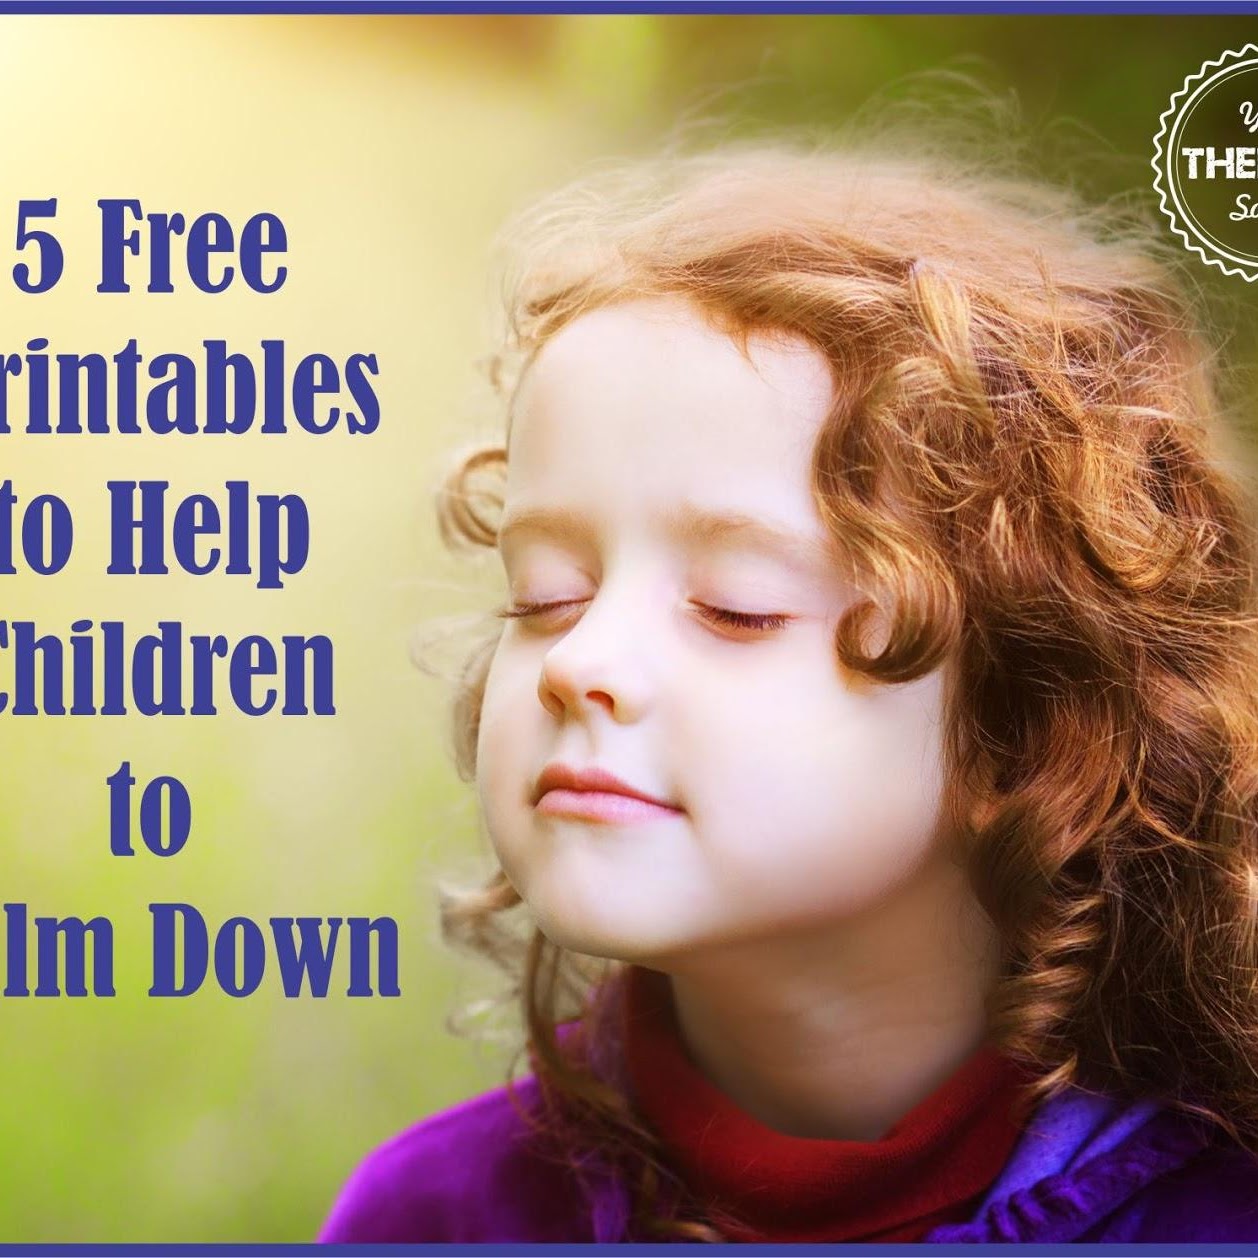 5 Free Sprintables to Help Children Meditate Down